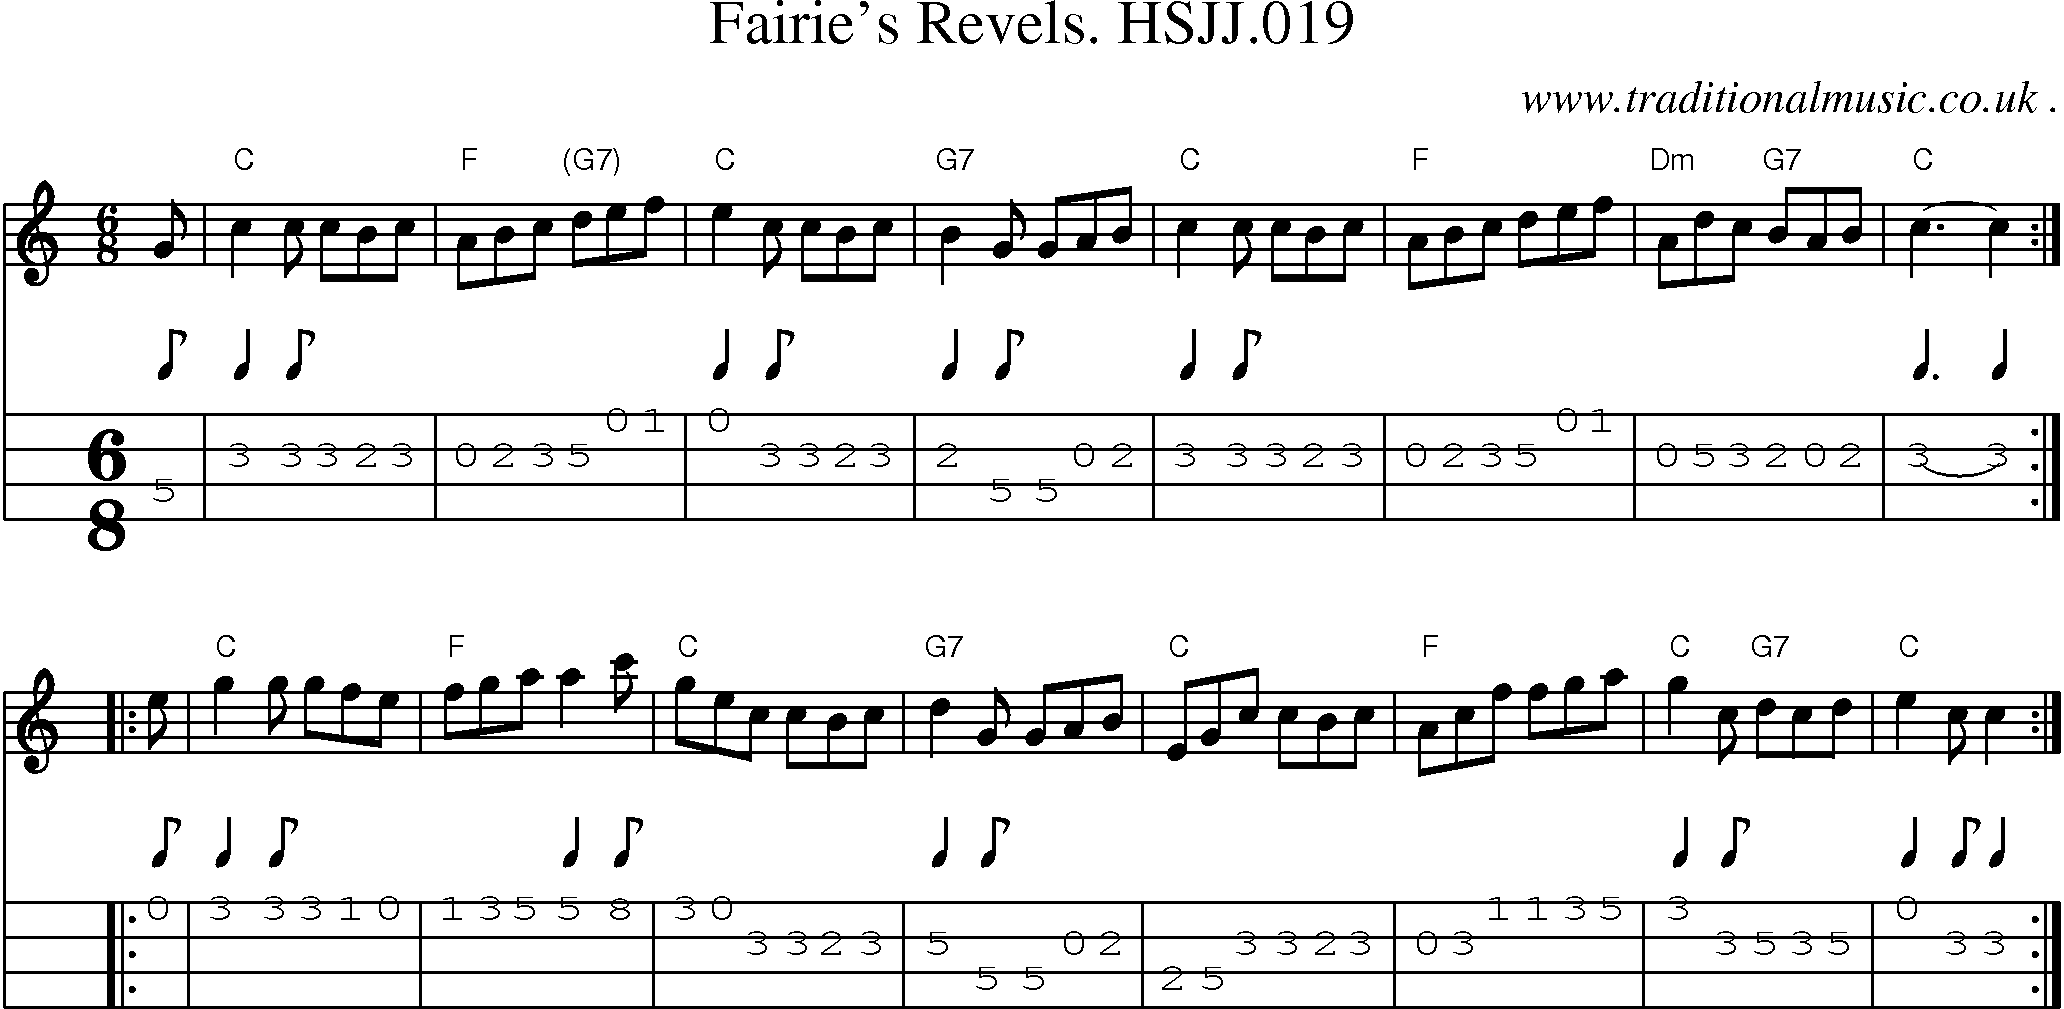 Sheet-music  score, Chords and Mandolin Tabs for Fairies Revels Hsjj019